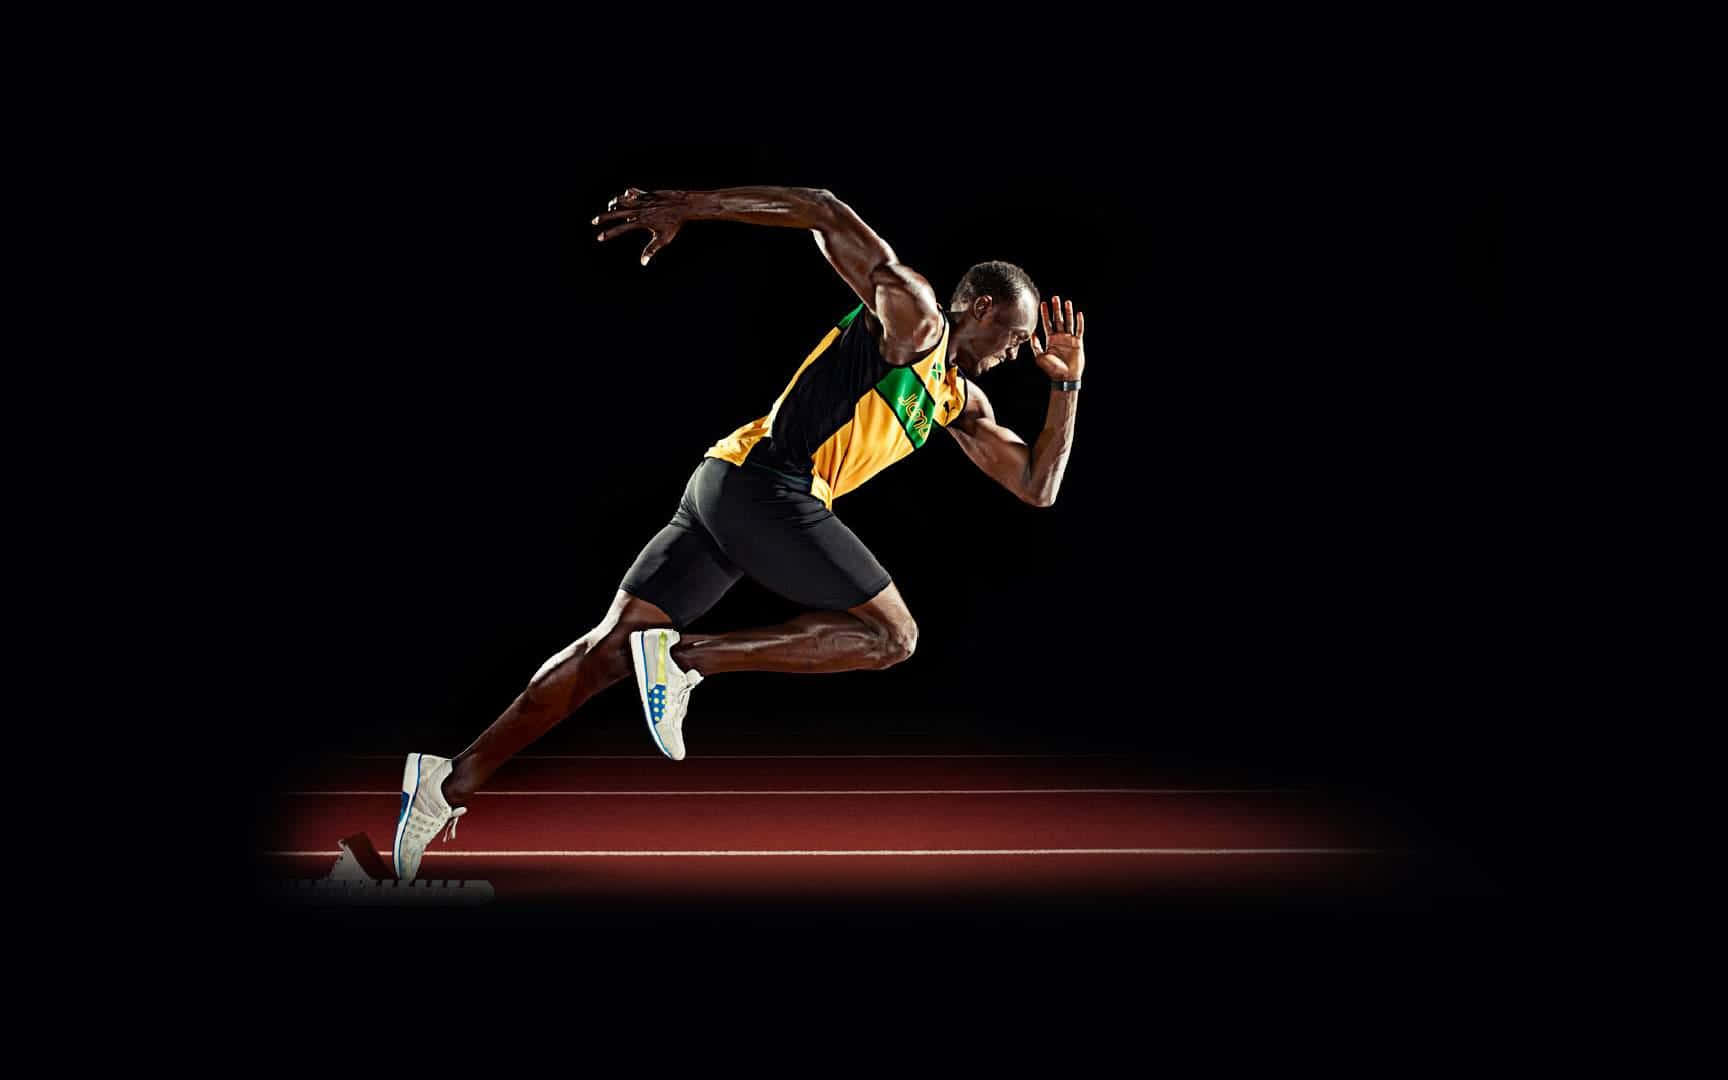 Jamaican Athlete Usain Bolt Illustration Wallpaper